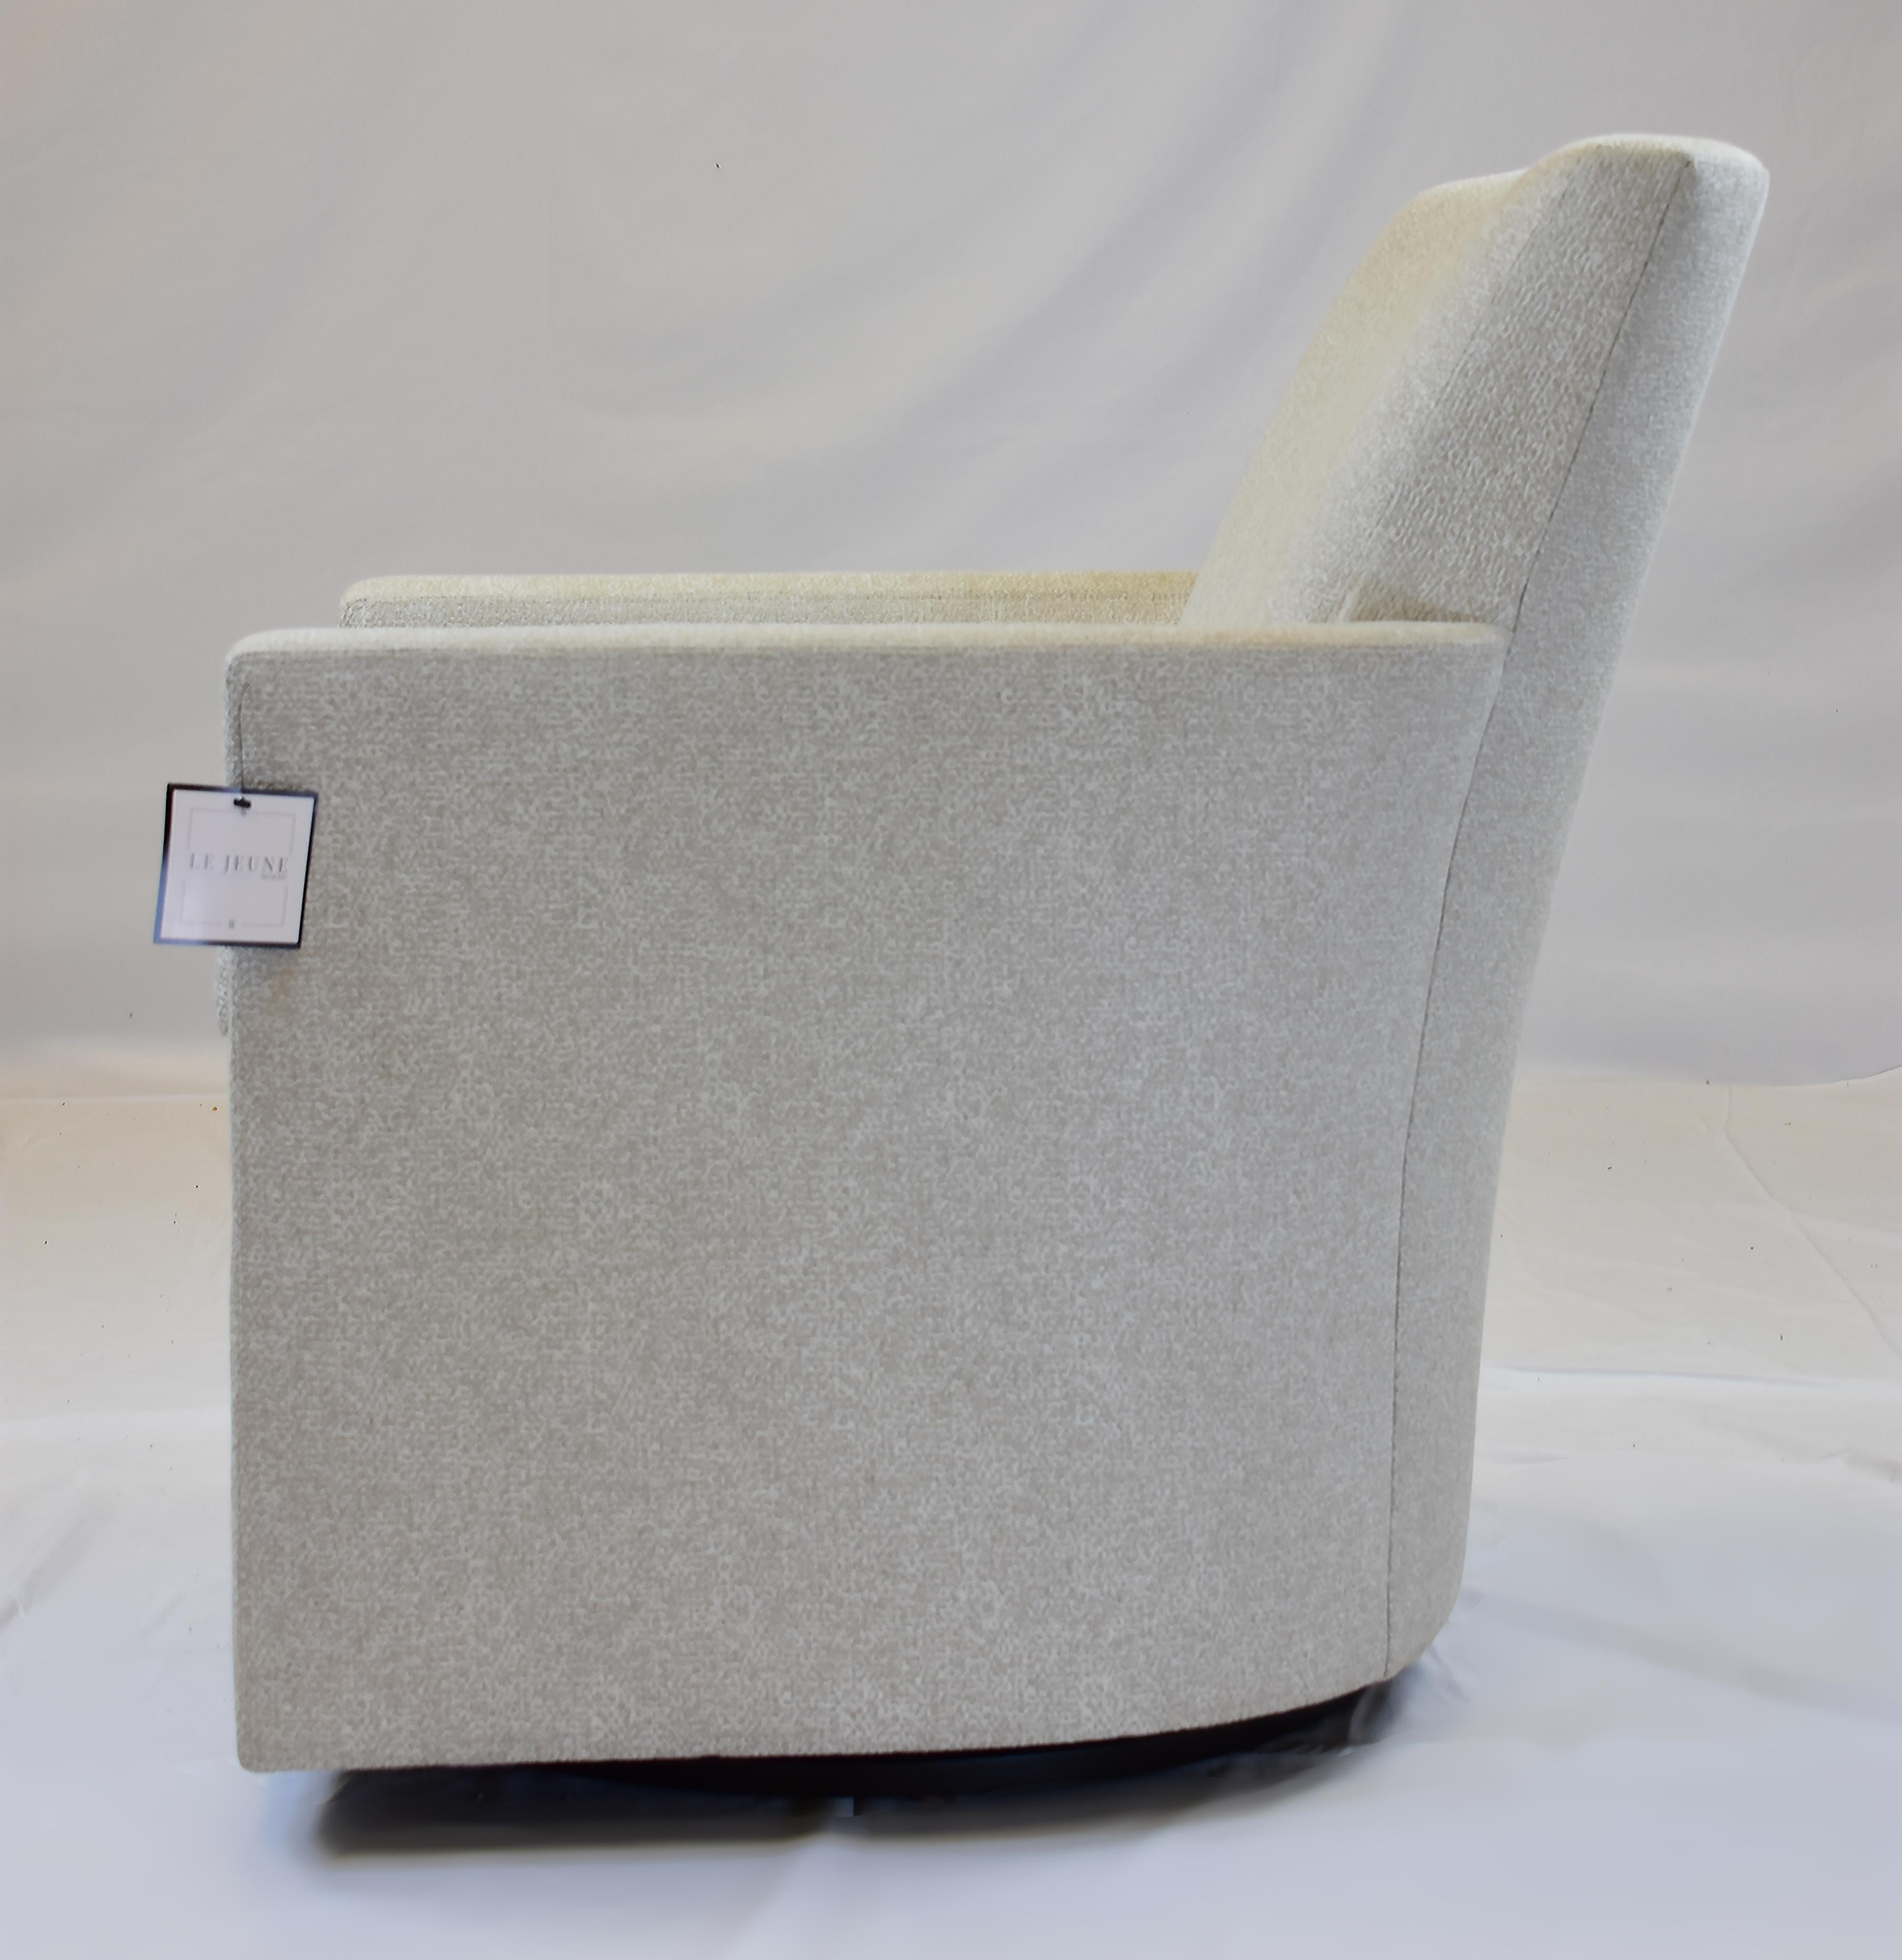 Le Jeune Upholstery Barrel Swivel Kara Chair Showroom Model, 2 Available For Sale 1